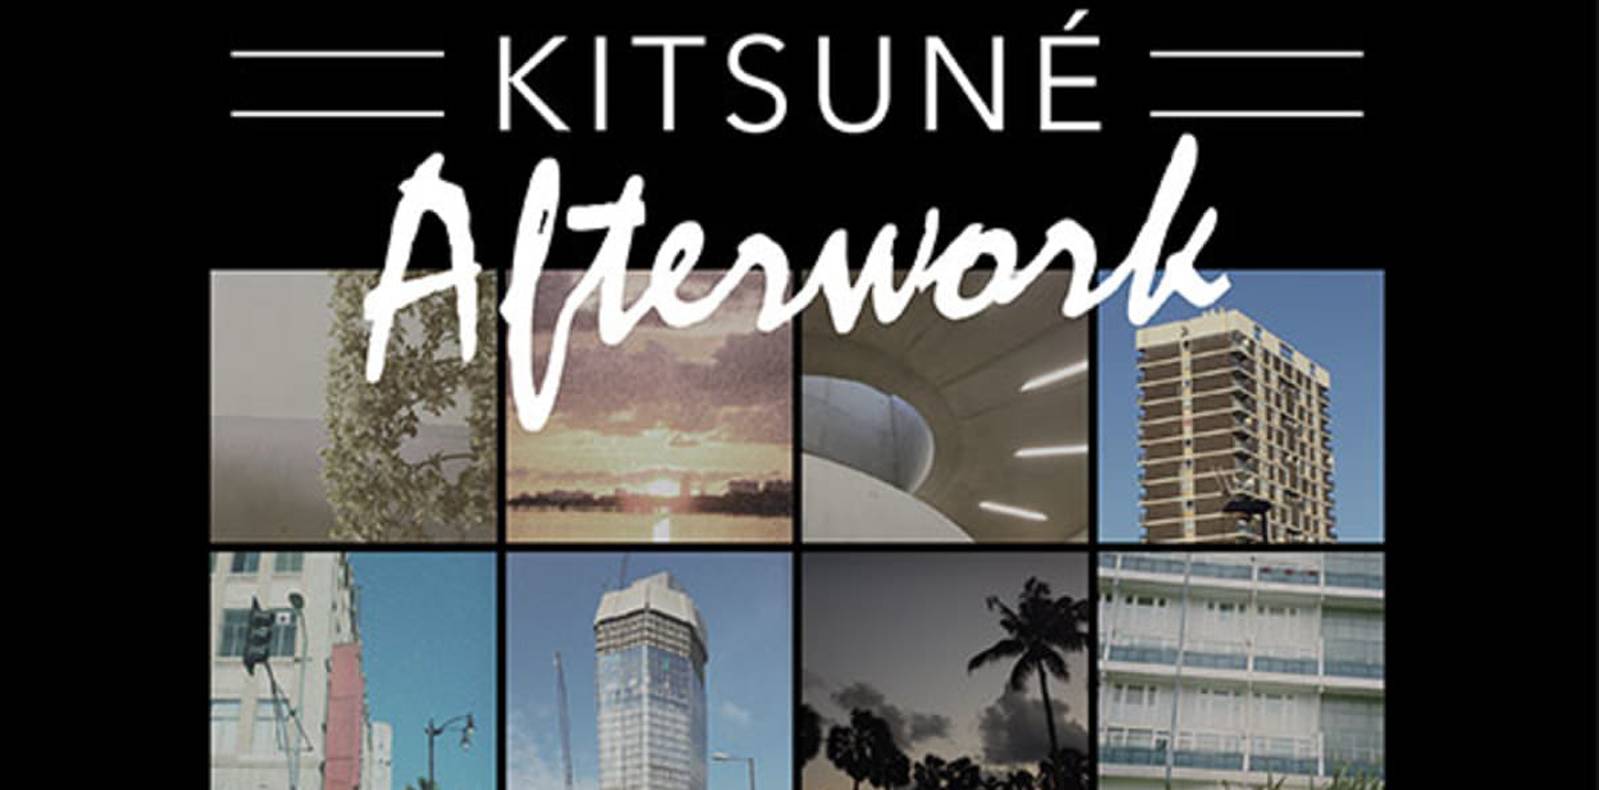 Kitsuné Afterwork Vol. 1